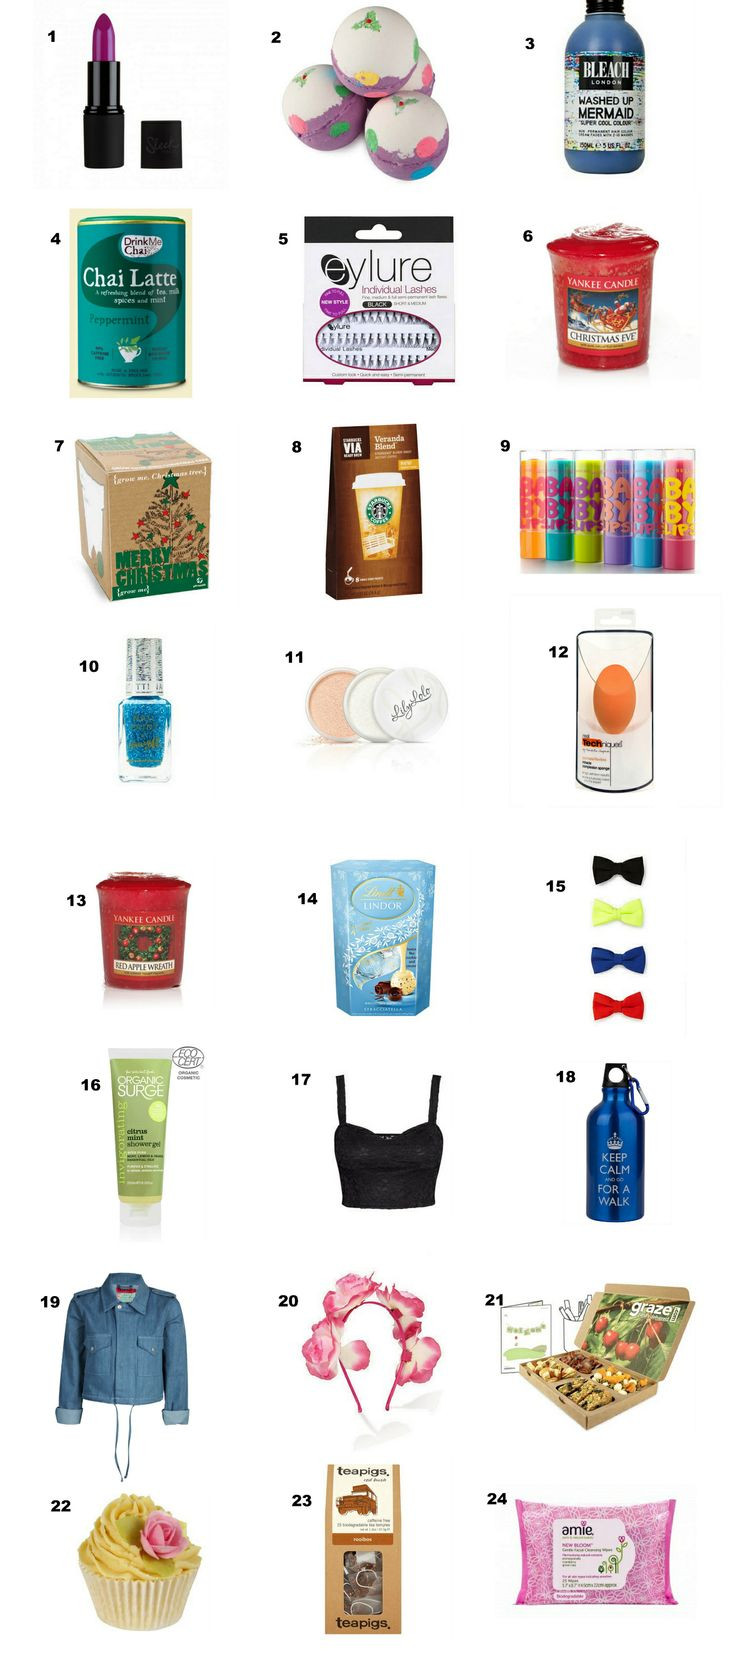 Best ideas about Advent Calendar Gift Ideas
. Save or Pin Best 25 Advent calendar fillers ideas on Pinterest Now.